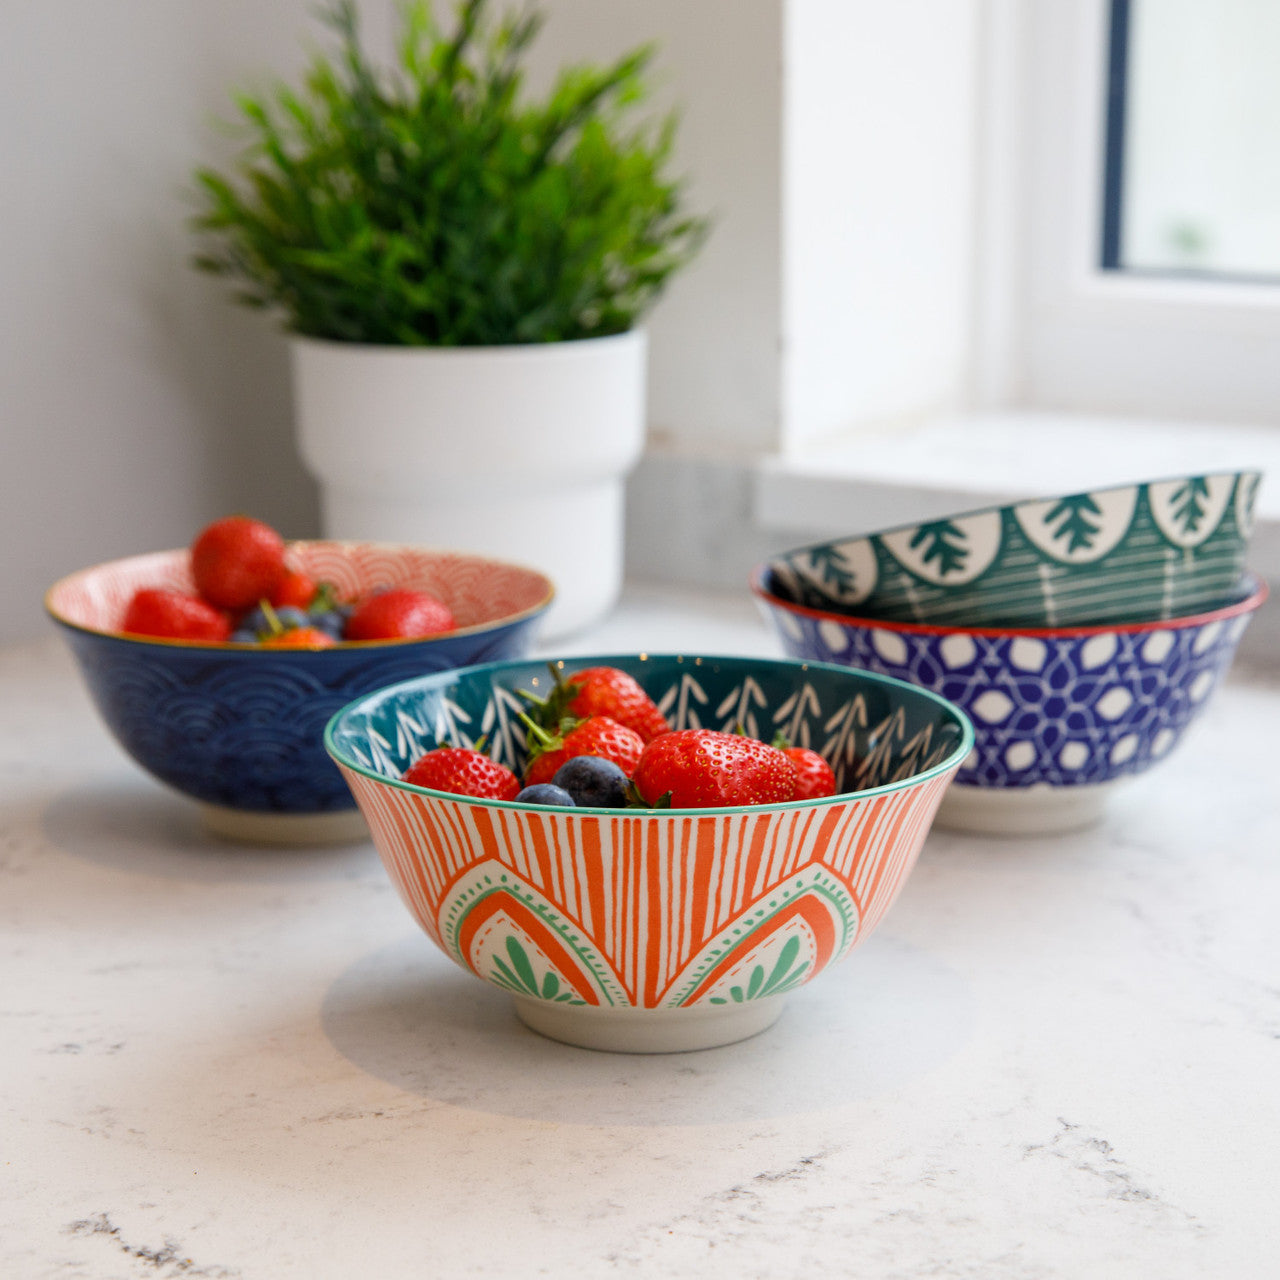 KitchenCraft Blue Arched Pattern Ceramic Bowls